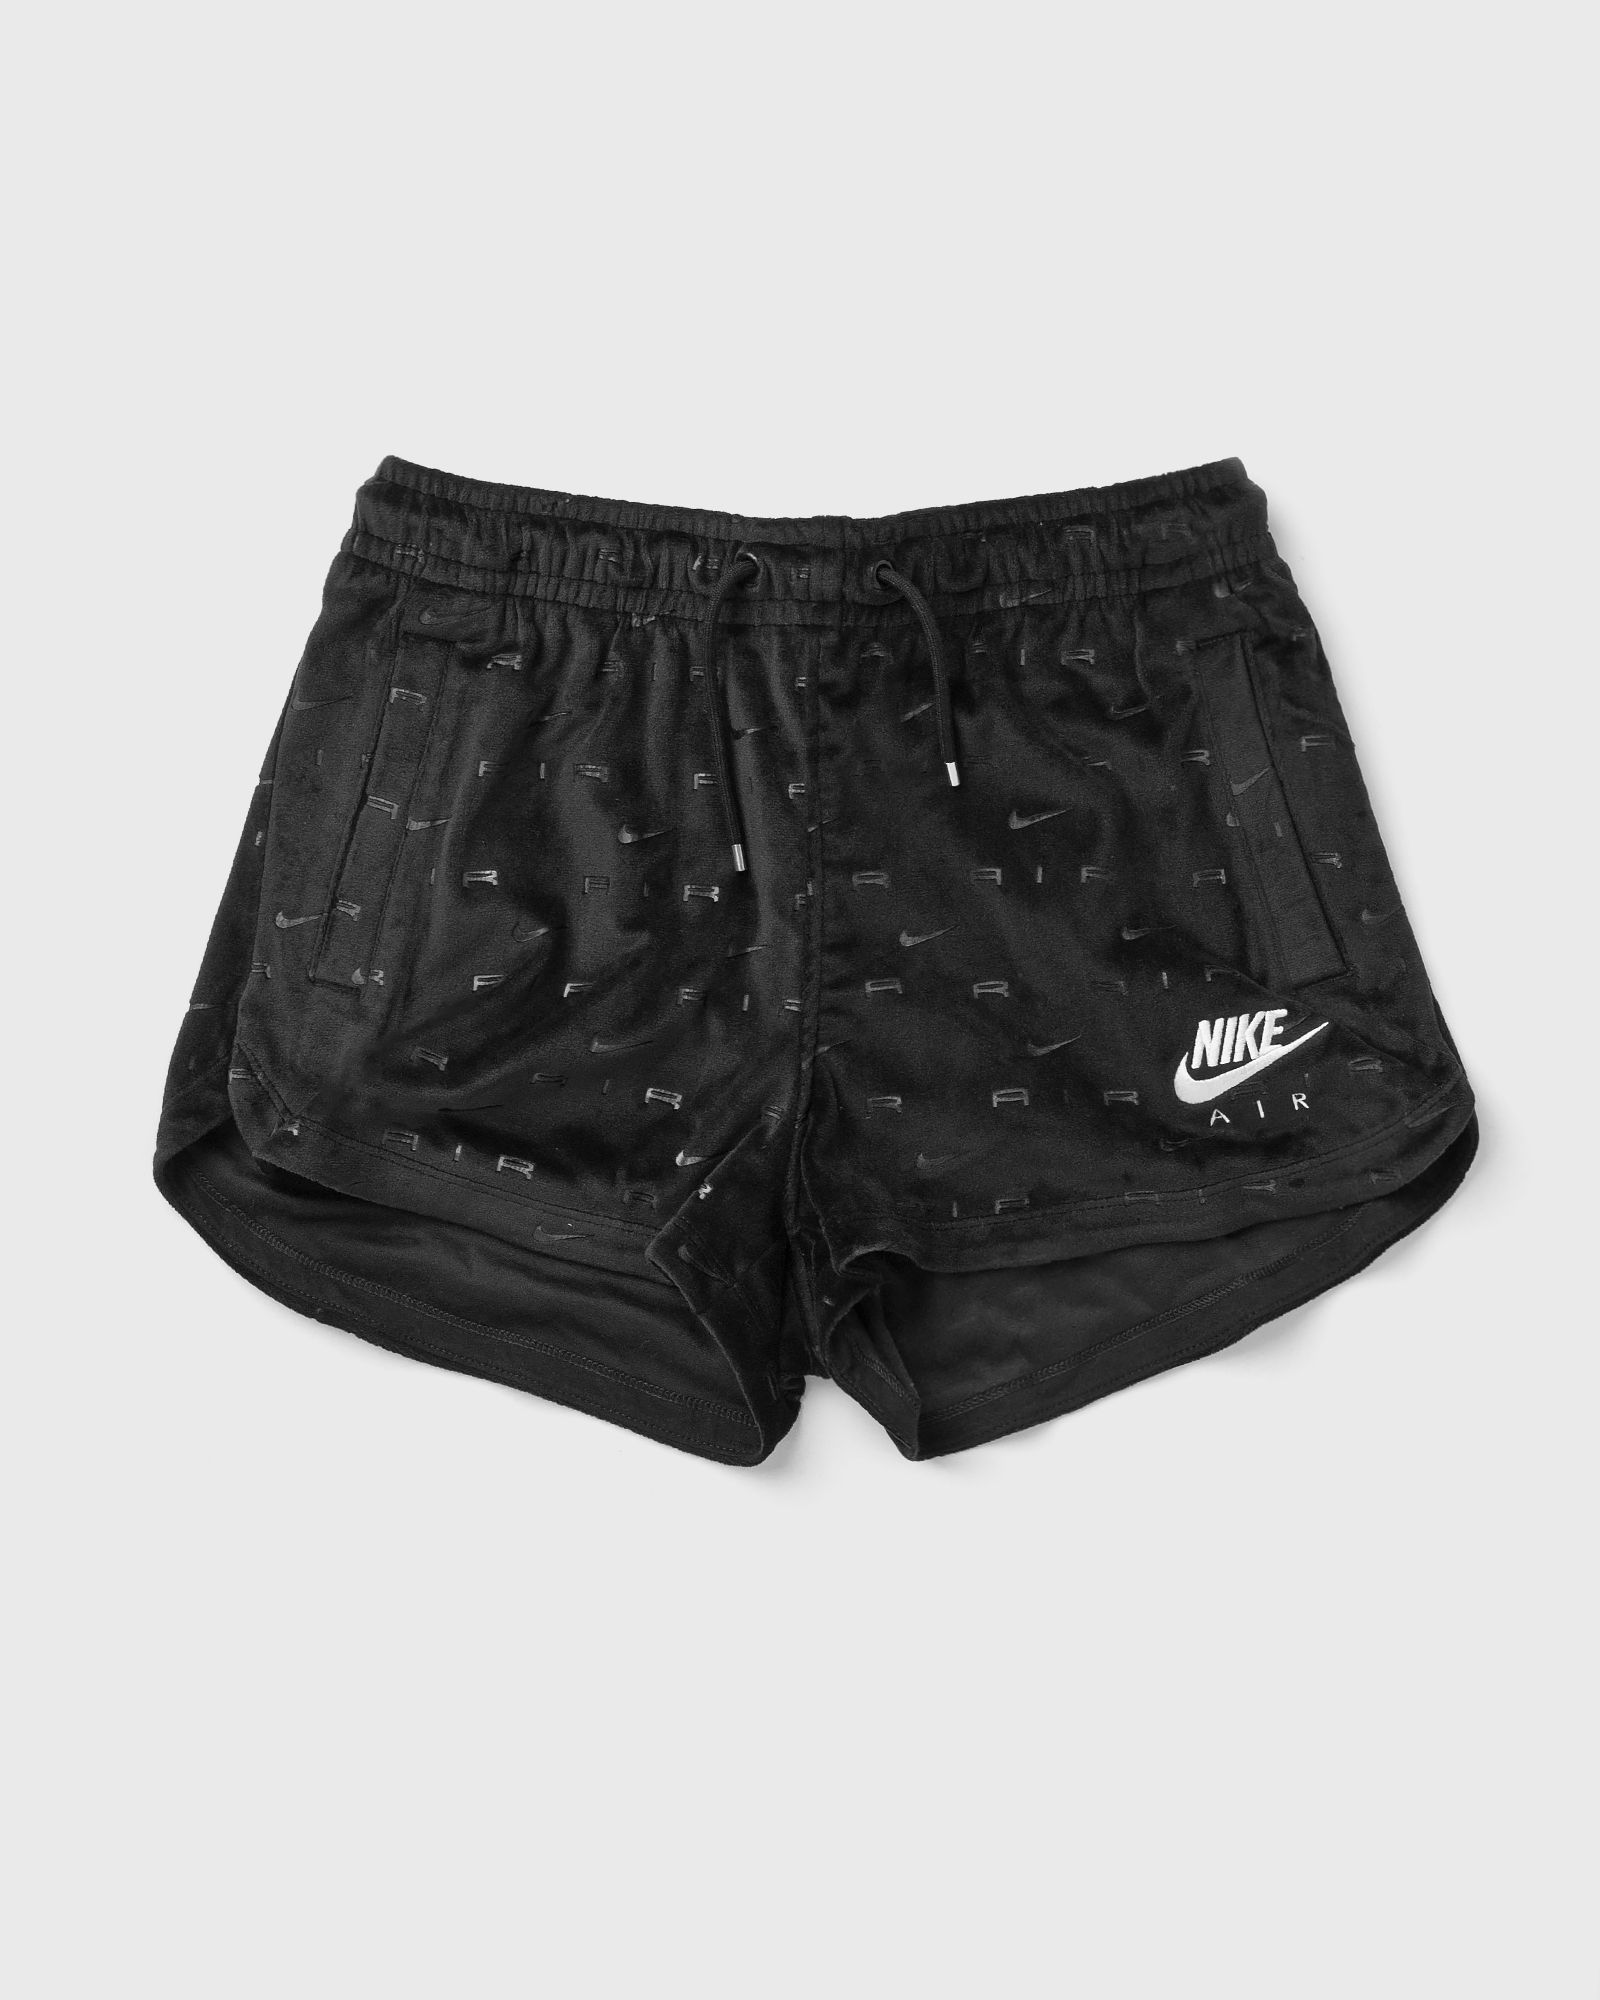 Nike - wmns velour mid-rise shorts women sport & team shorts black in größe:m